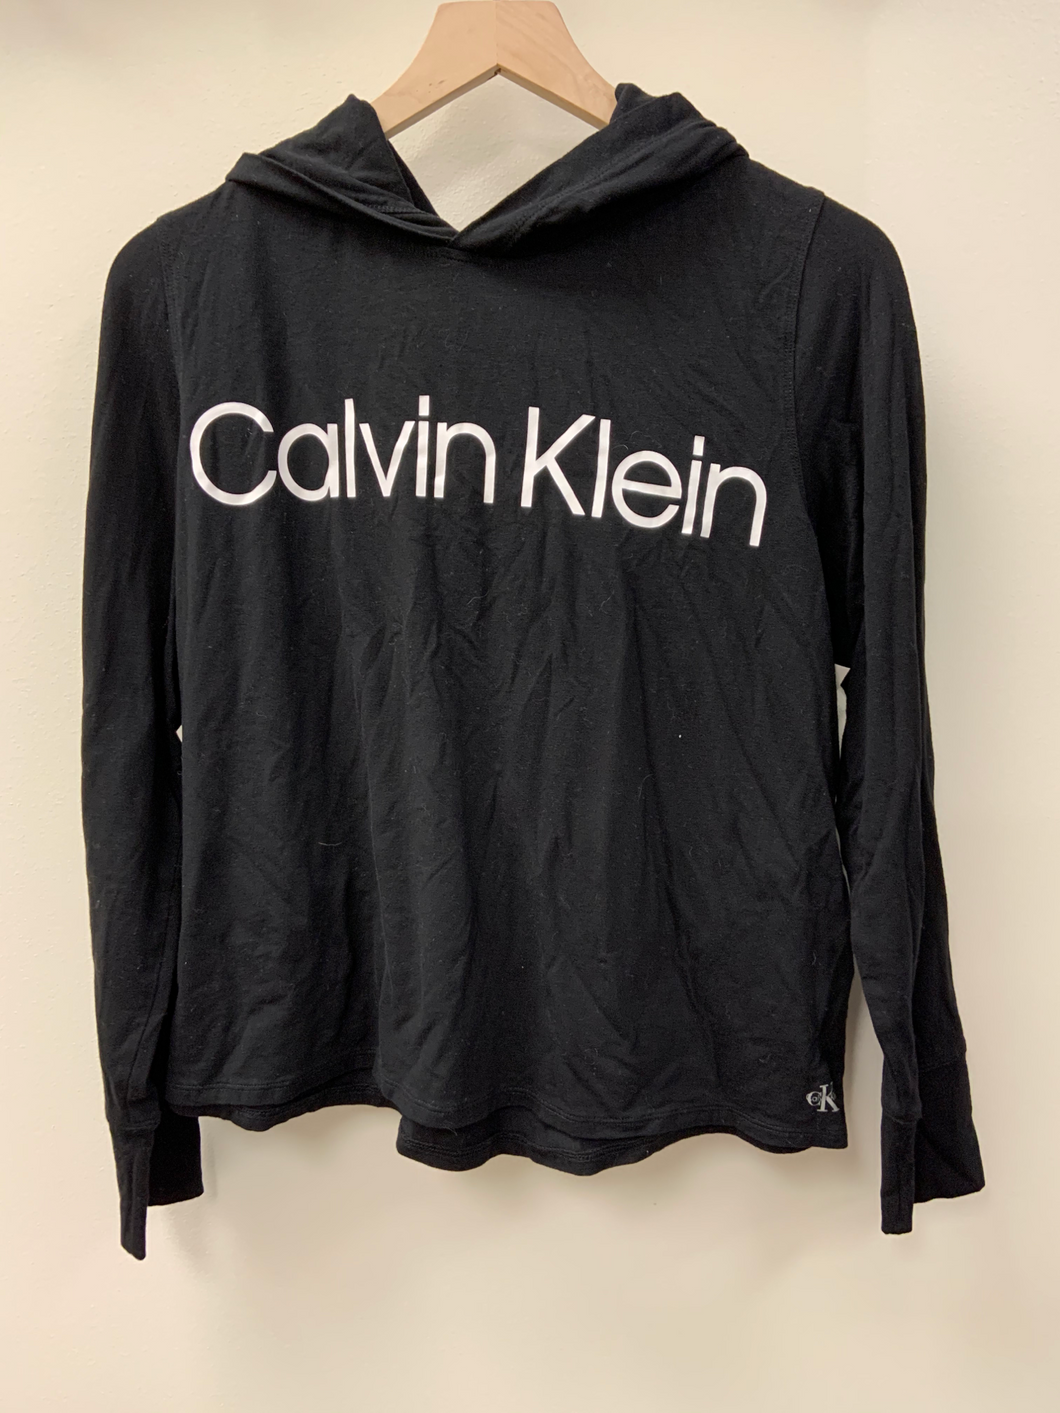 Calvin Klein Sweatshirt Size Small